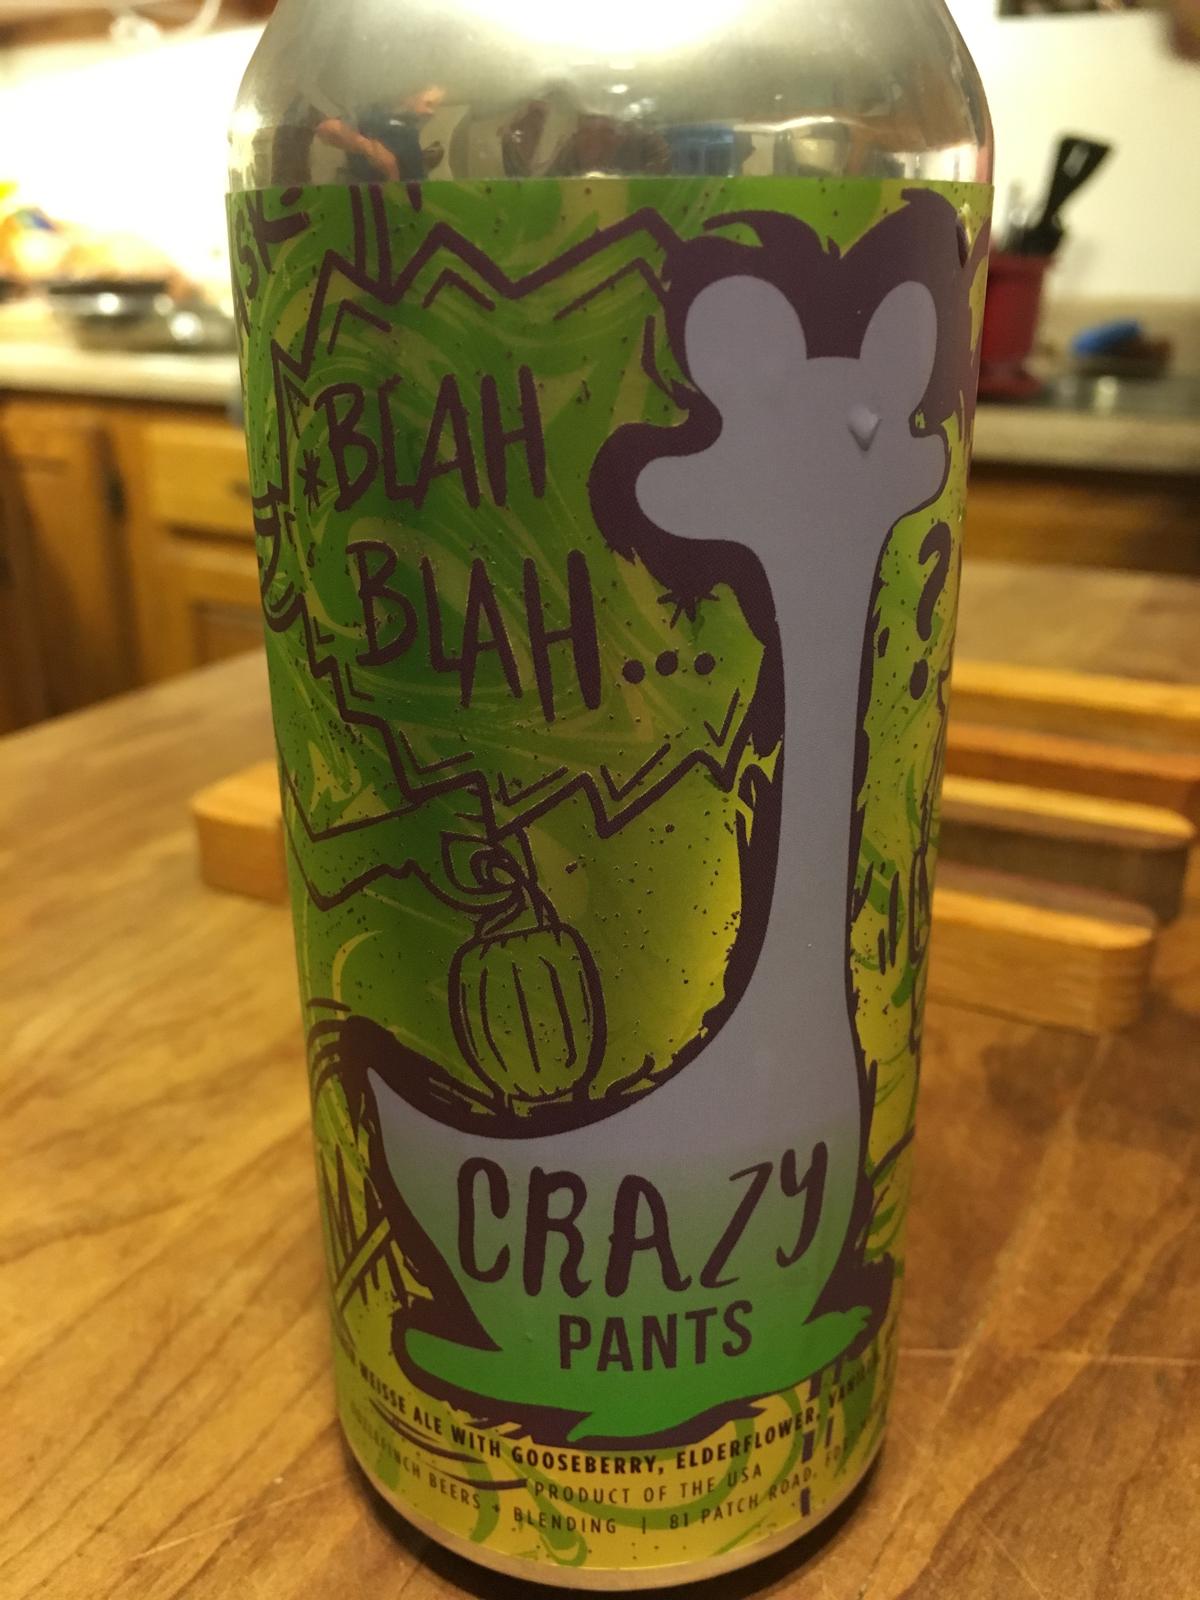 Crazy Pants: Blah Blah